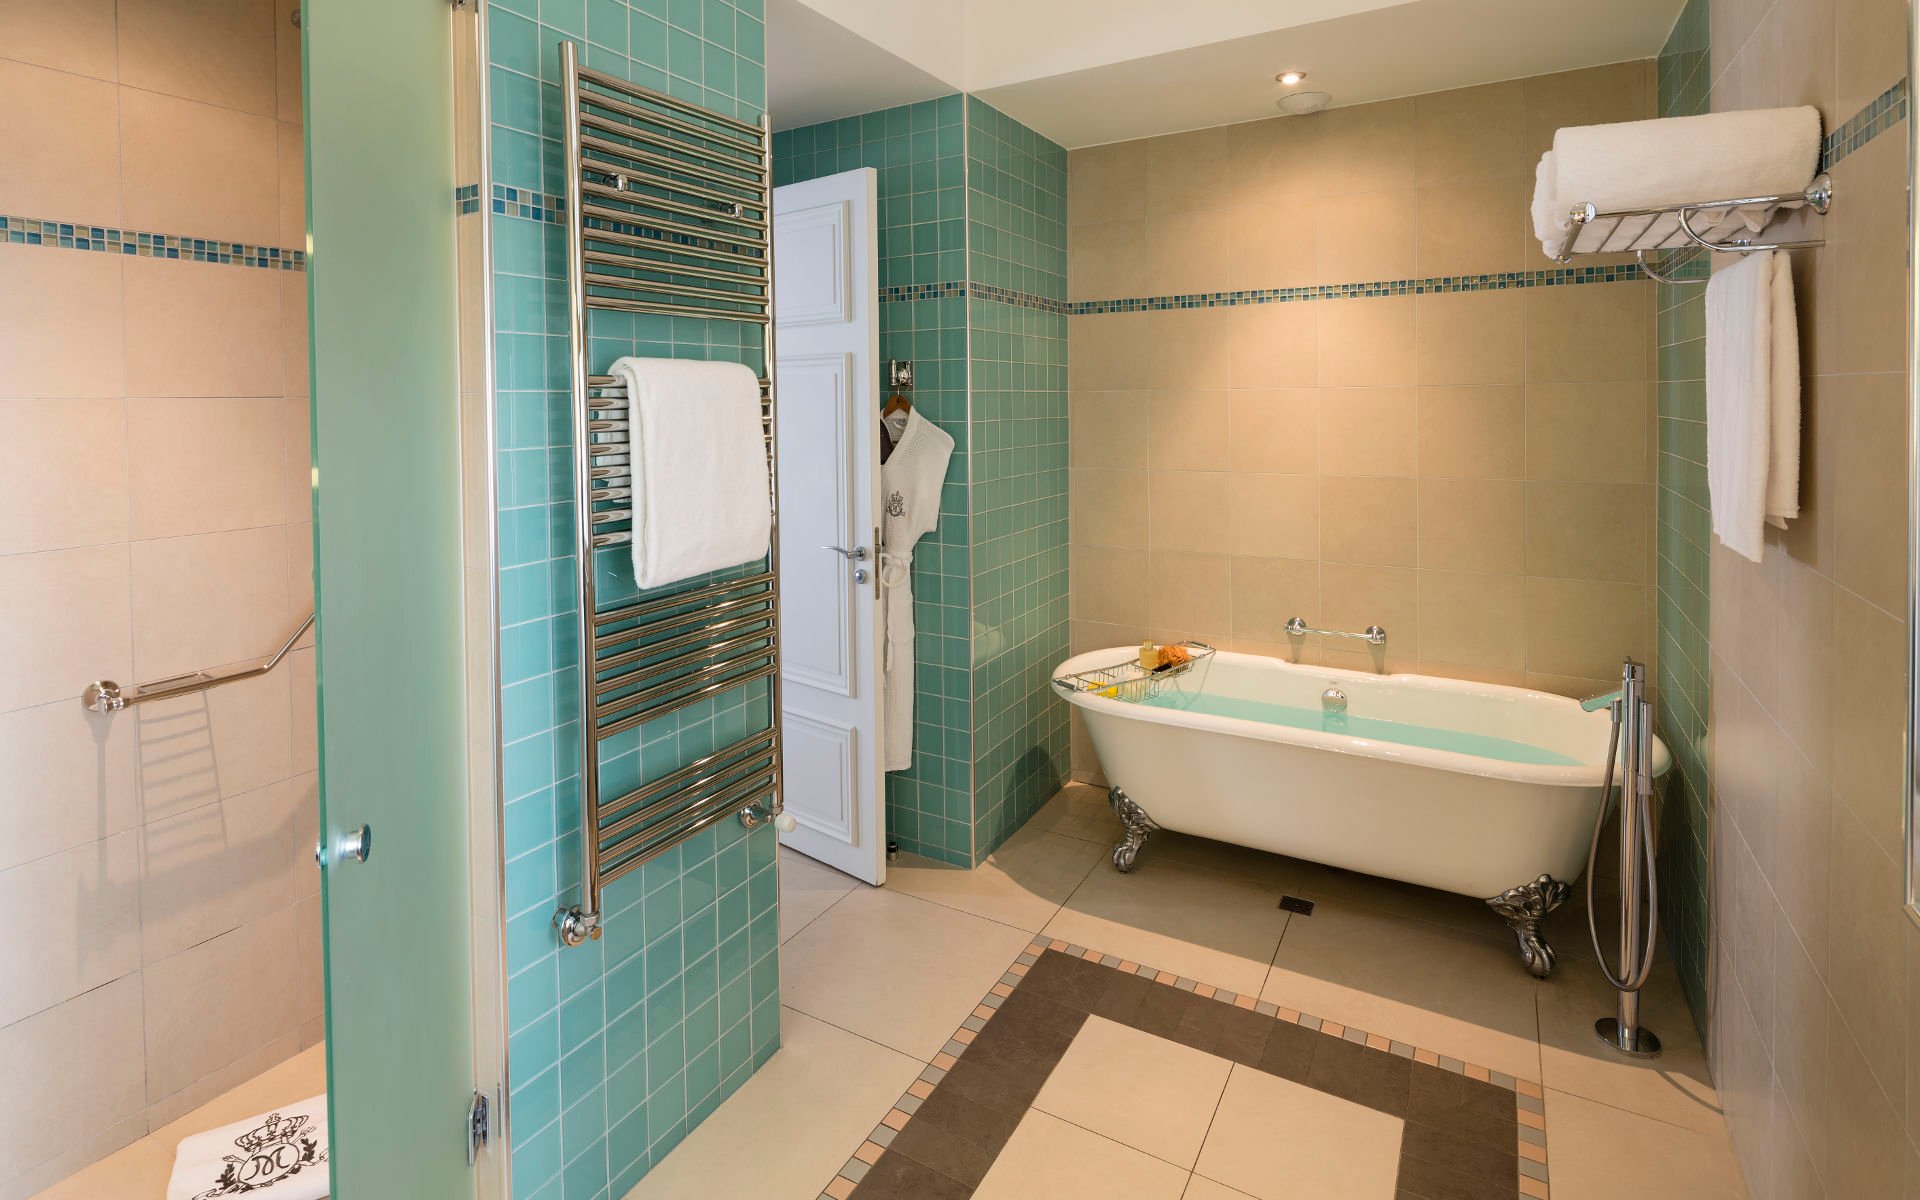 260/Suites/Suite prestige/Suite Prestige - Bathroom 9-  Majestic Hotel-Spa.jpg